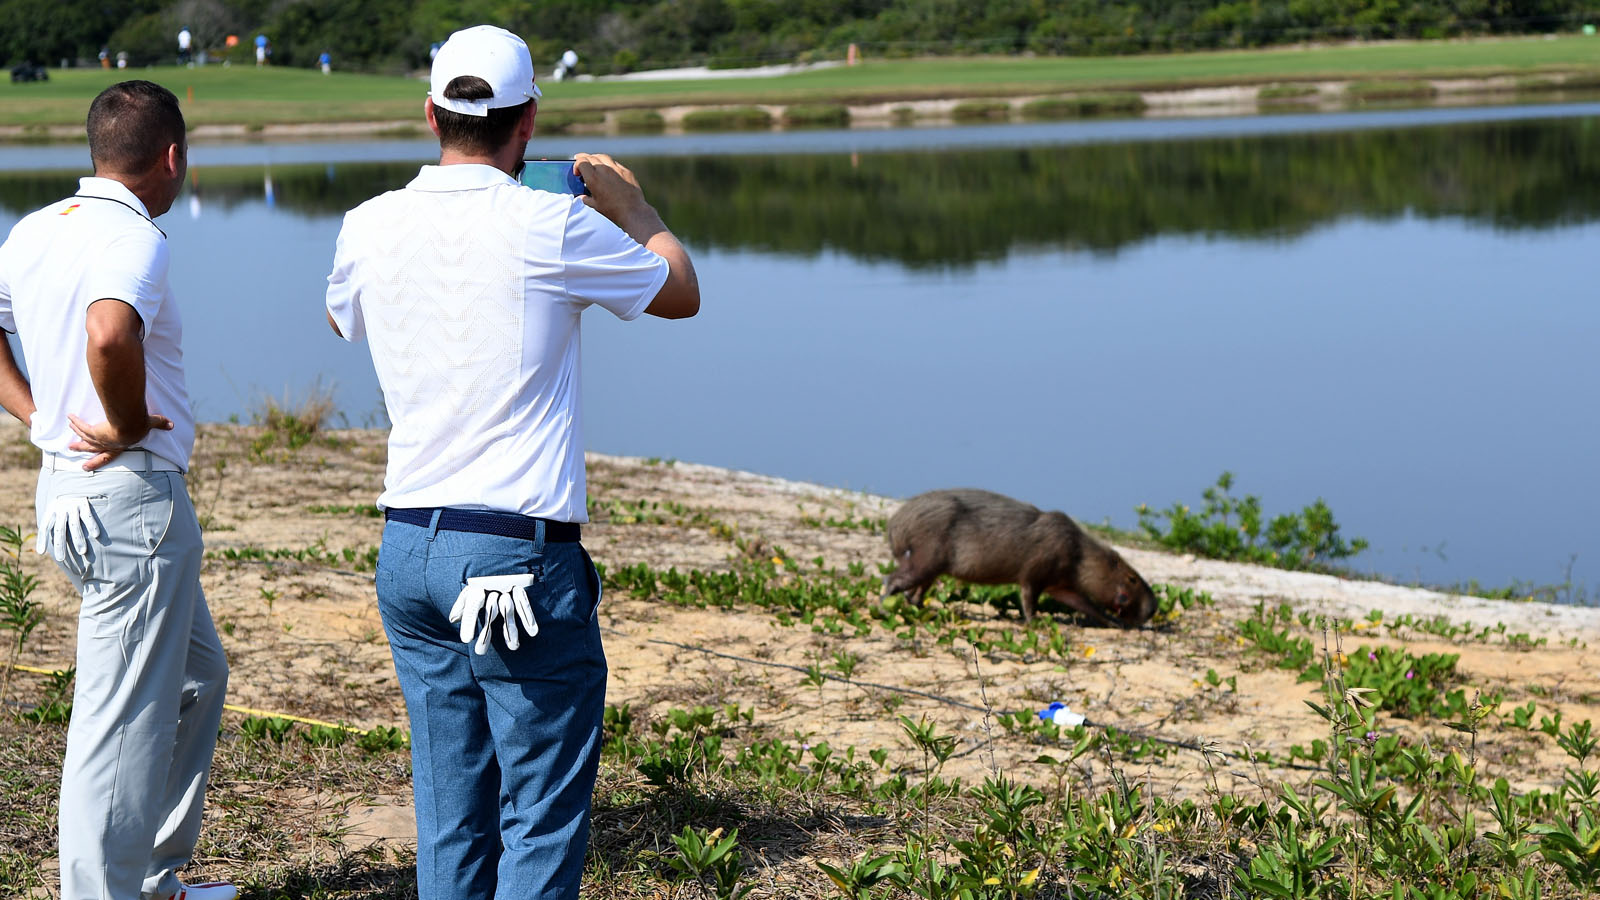 Rio golf course home to owls, alligators, and....capybara? 